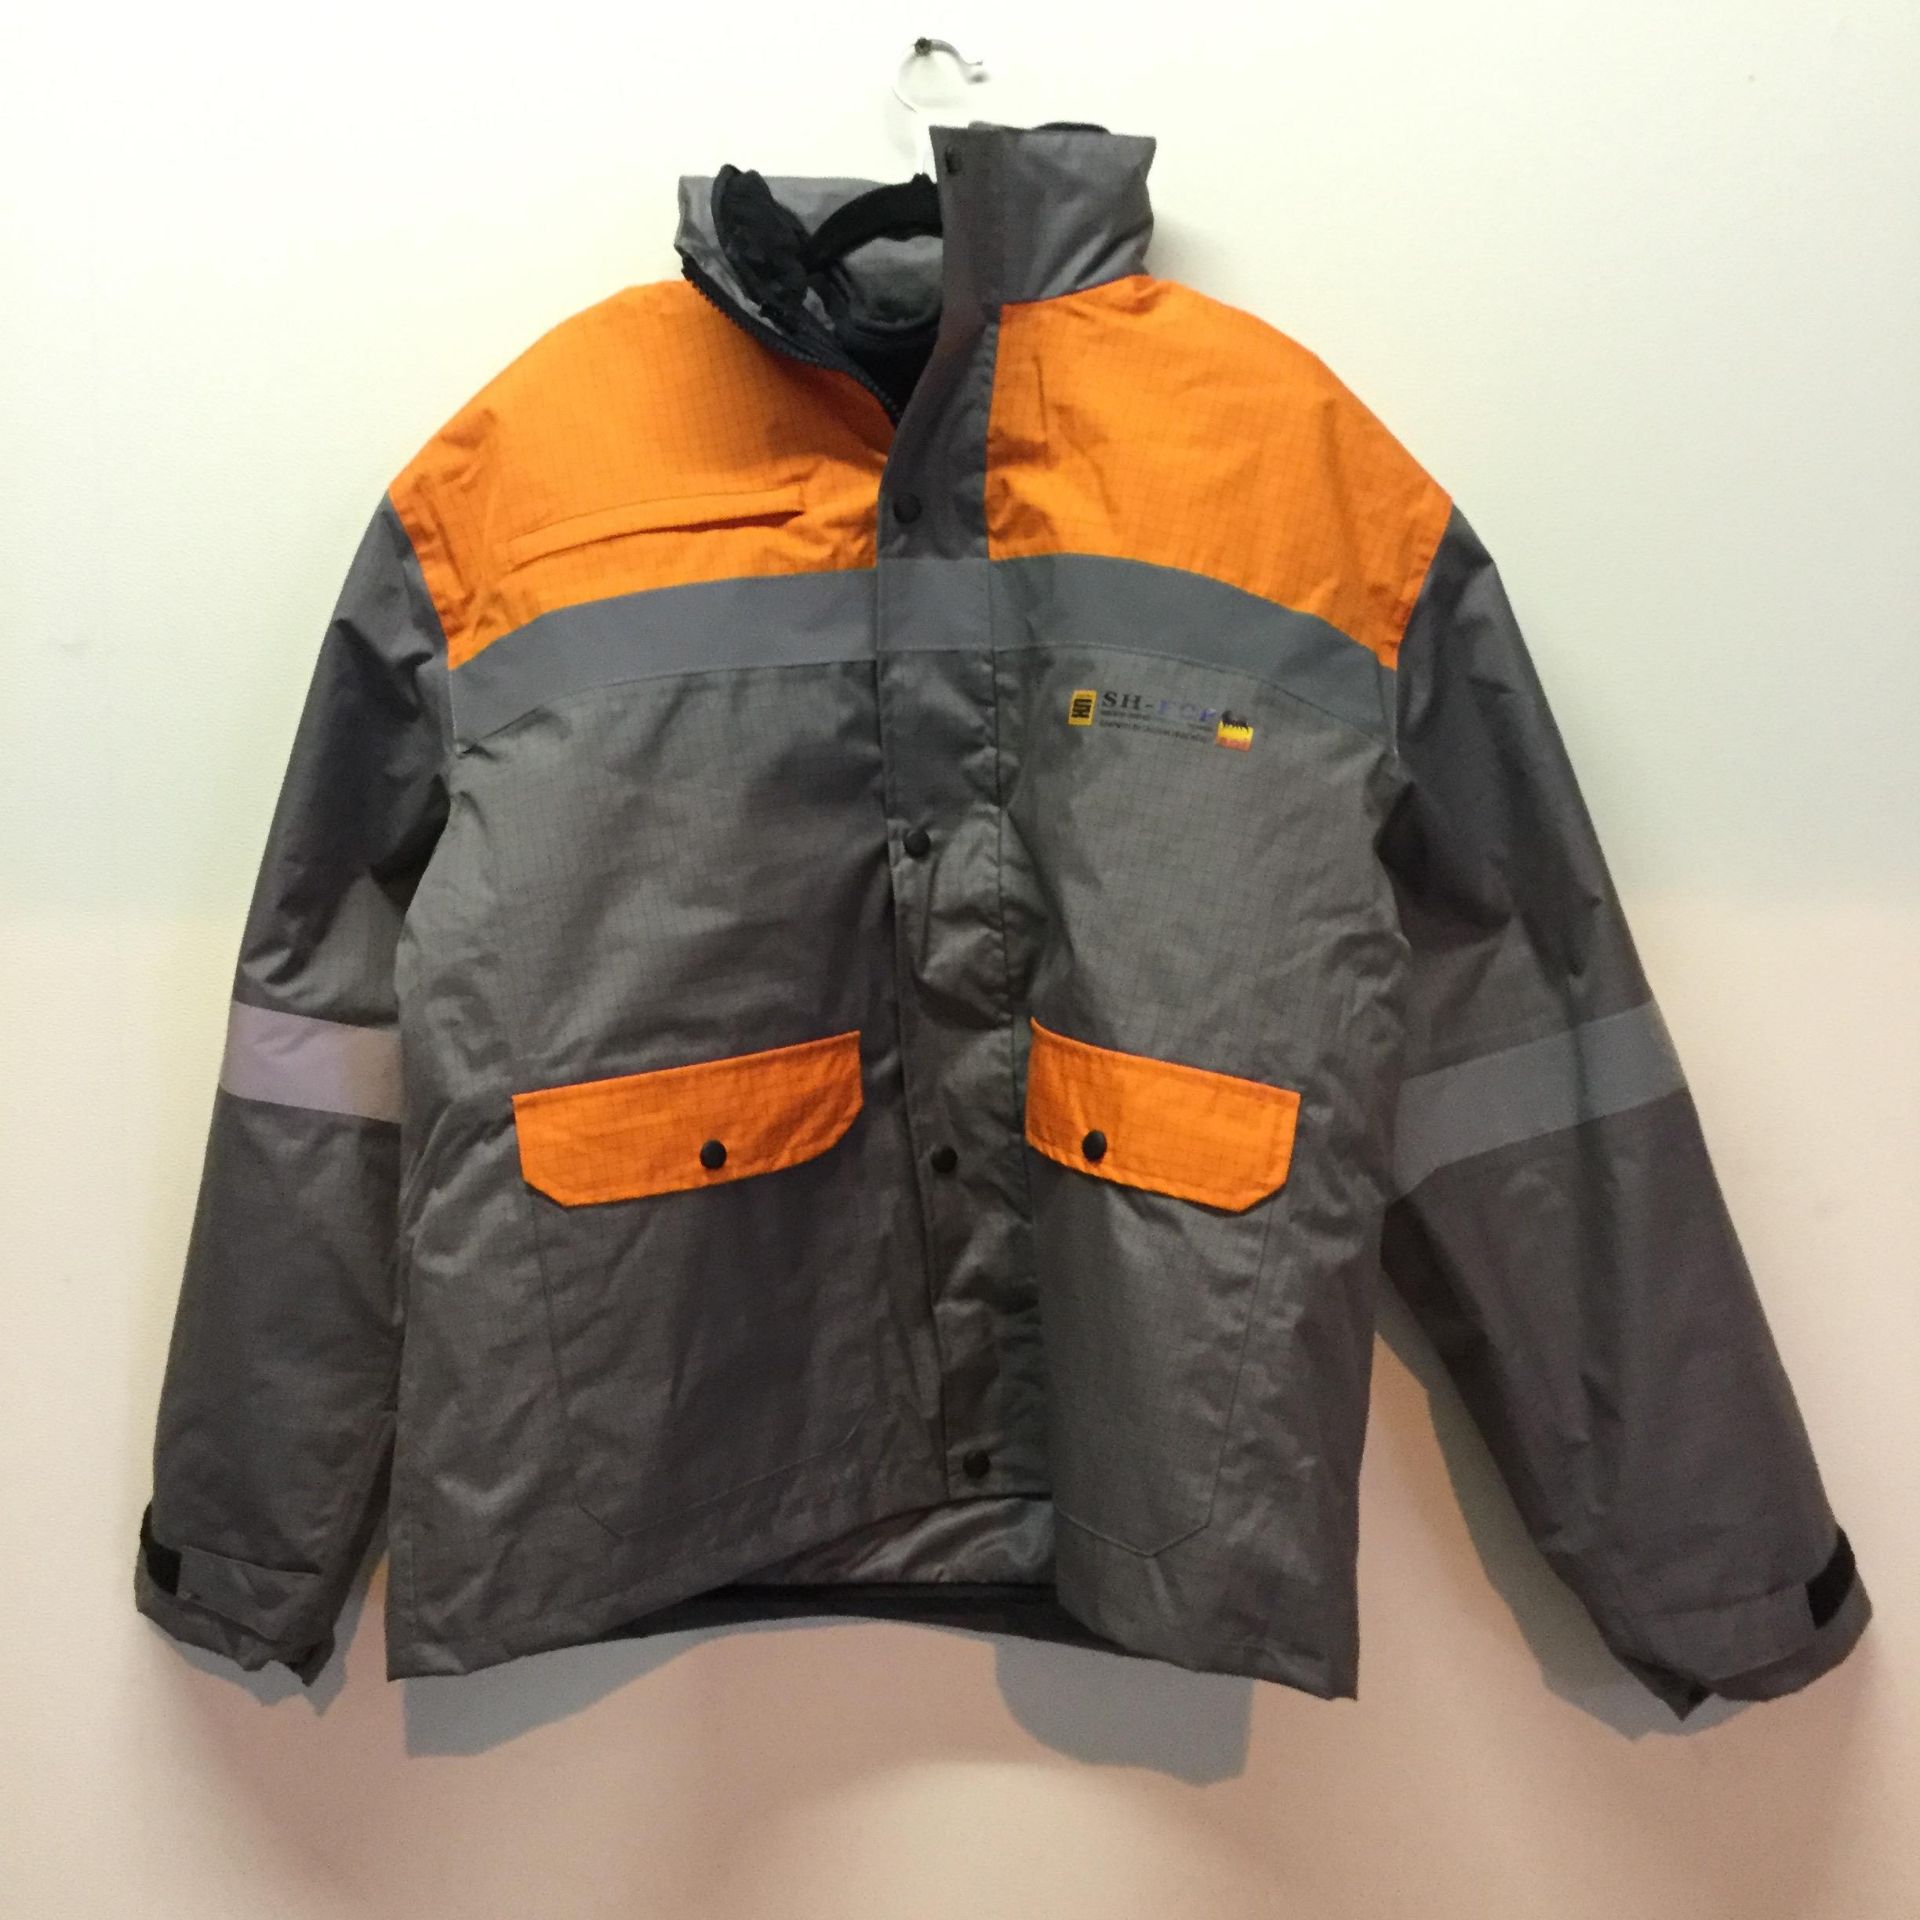 All Weather 3 layer Gortex Antistatic waterproof jacket - Size 50